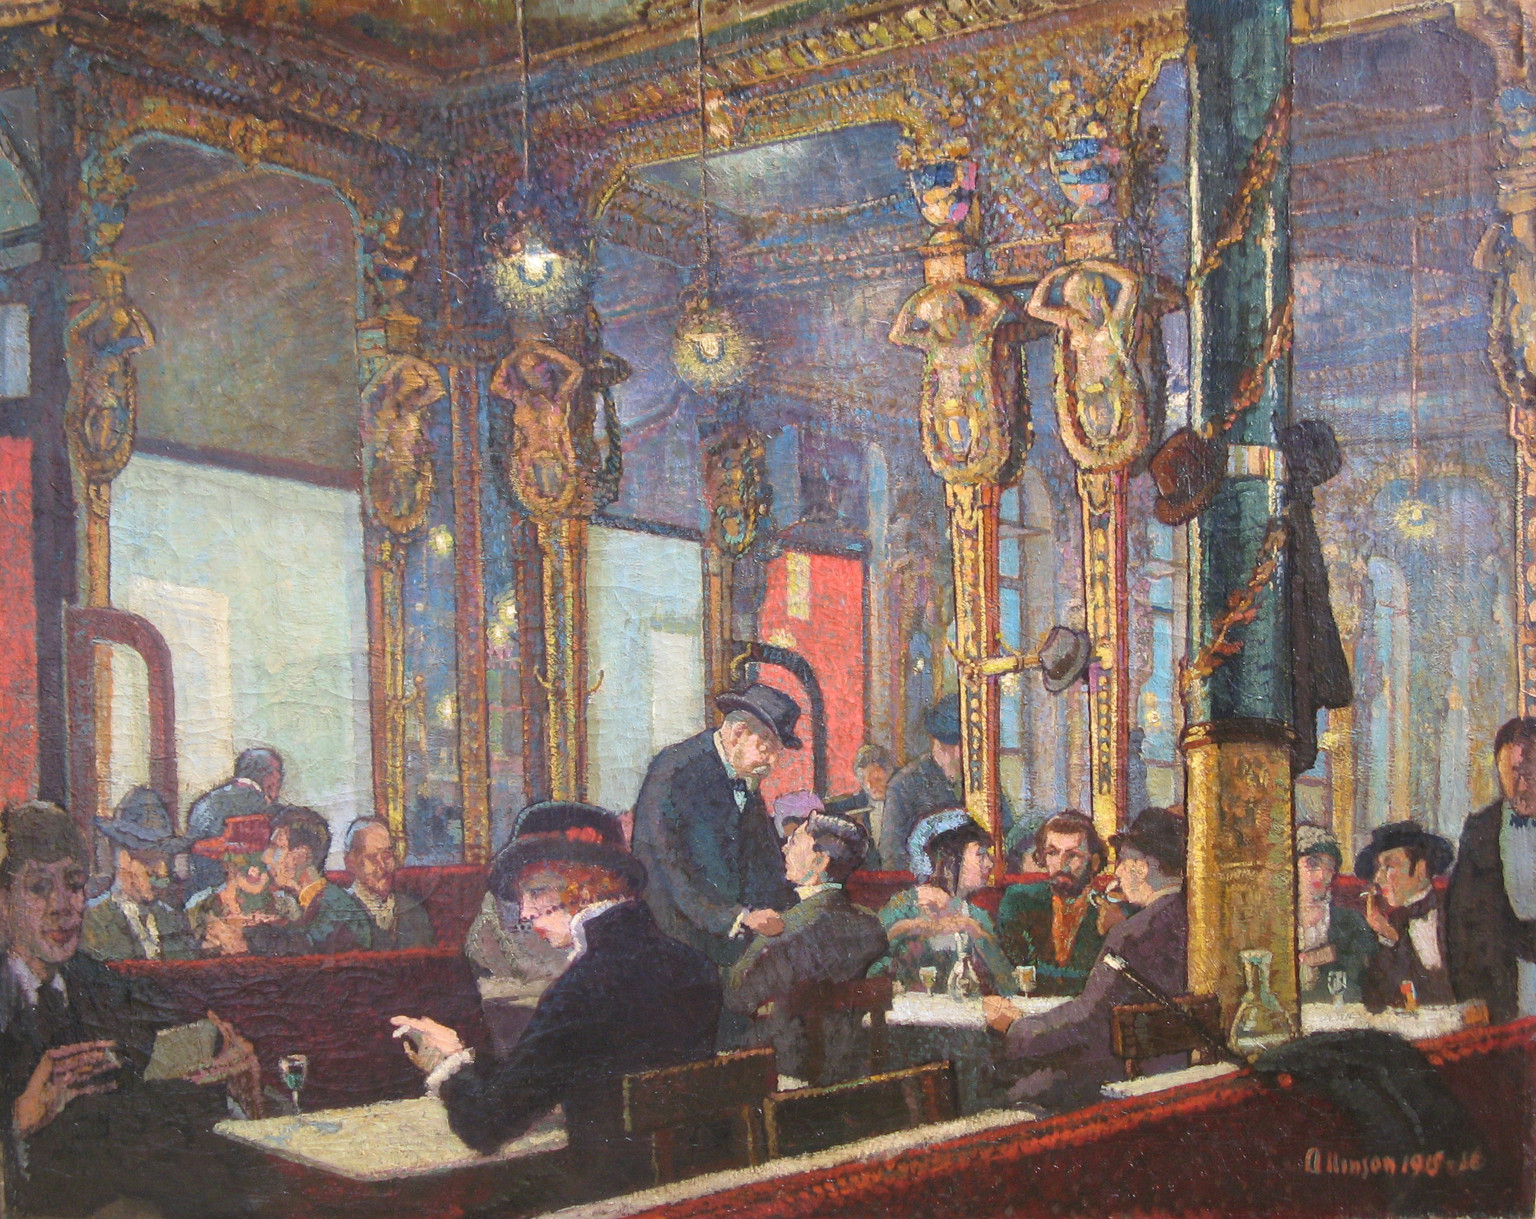 File:William Orpen The Café Royal, London.jpg - Wikipedia